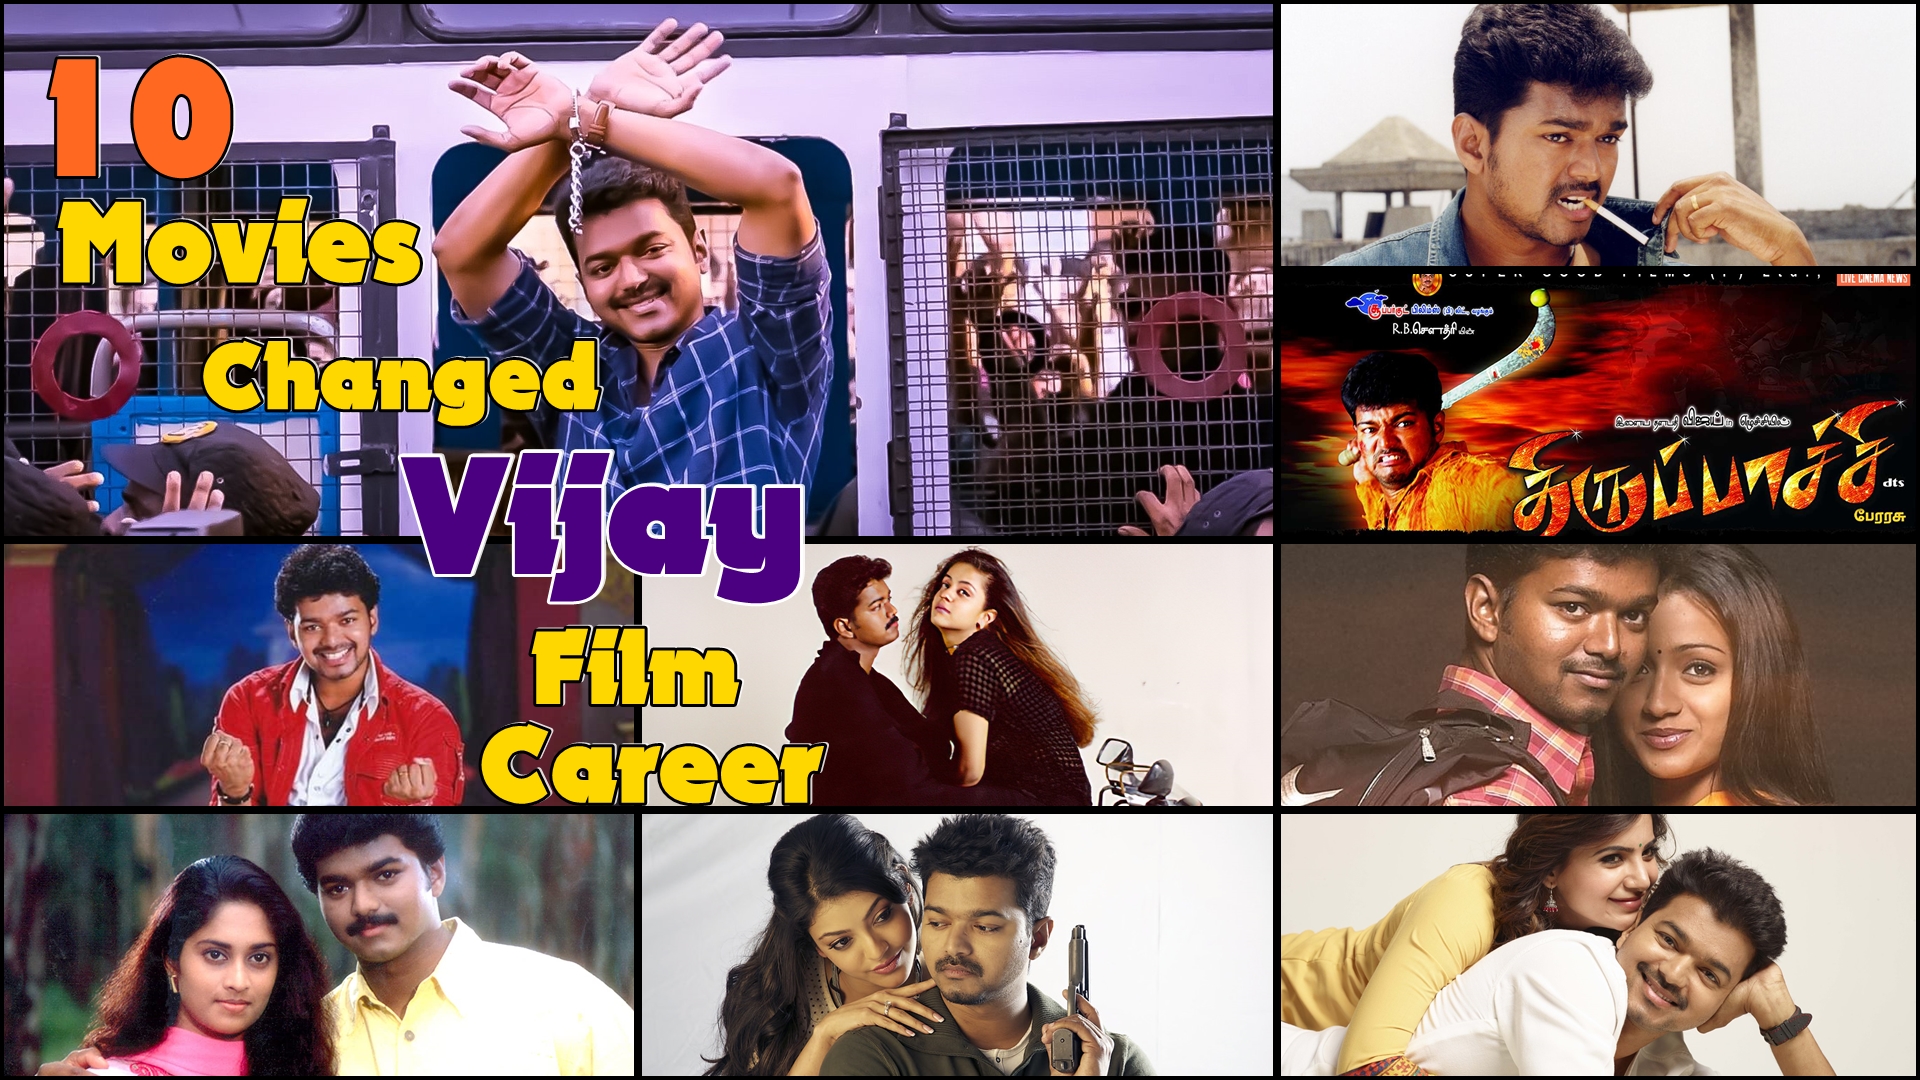 10 movies changed vijay film career